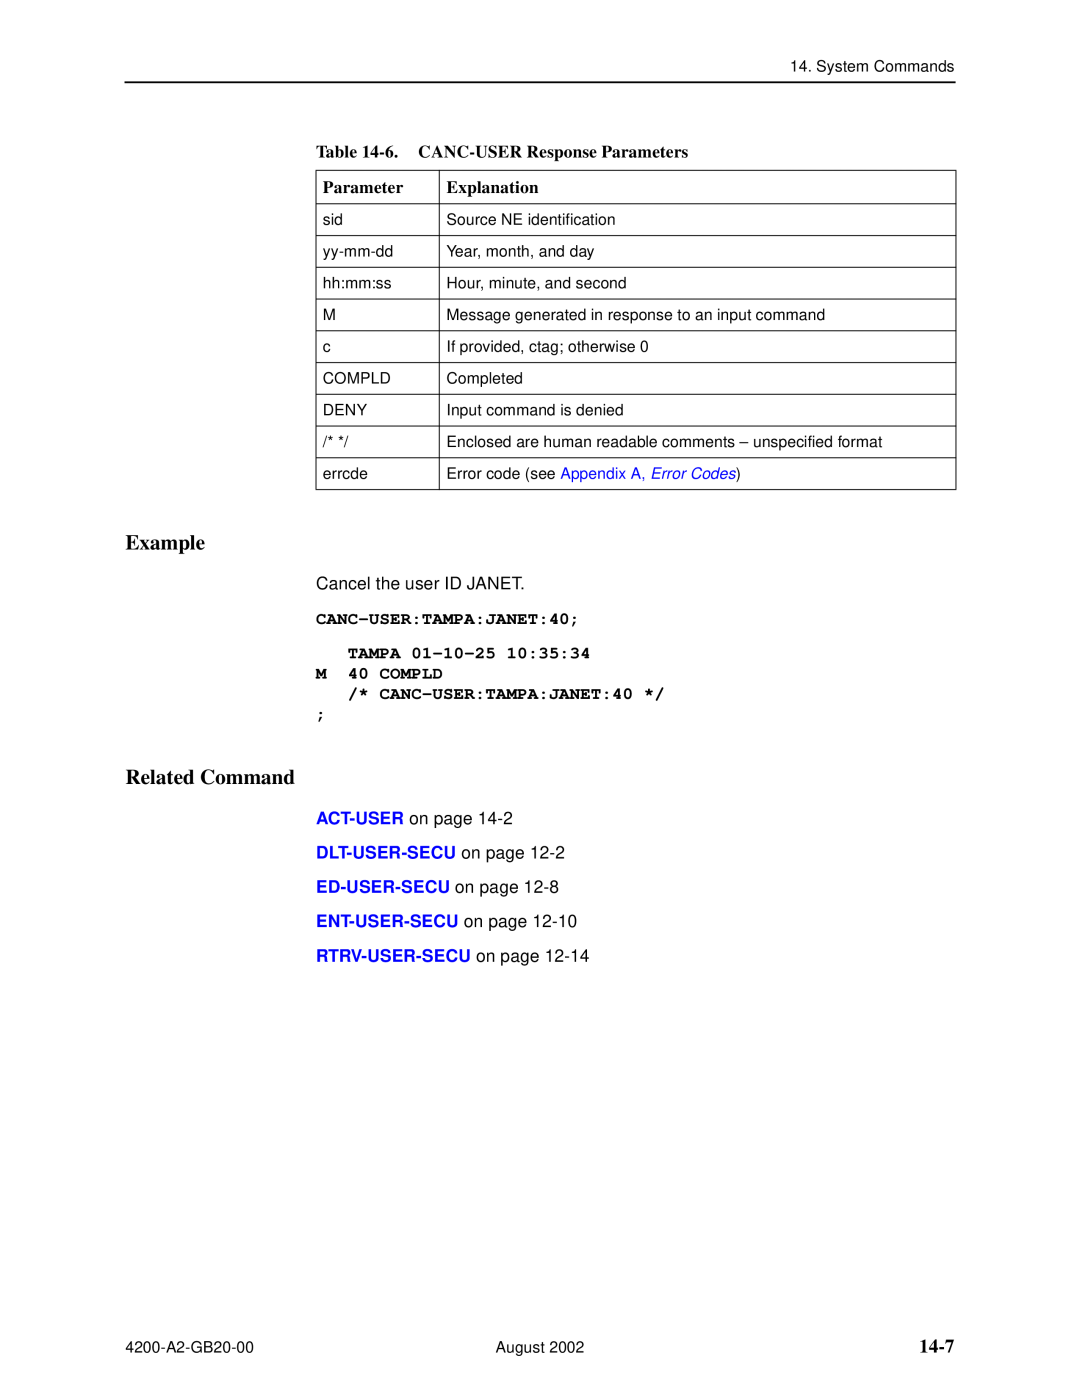 Paradyne 4200 manual 14-7, 6. CANC-USER Response Parameters, CANC-USERTAMPAJANET40 TAMPA 01-10-25 M 40 COMPLD, Example 